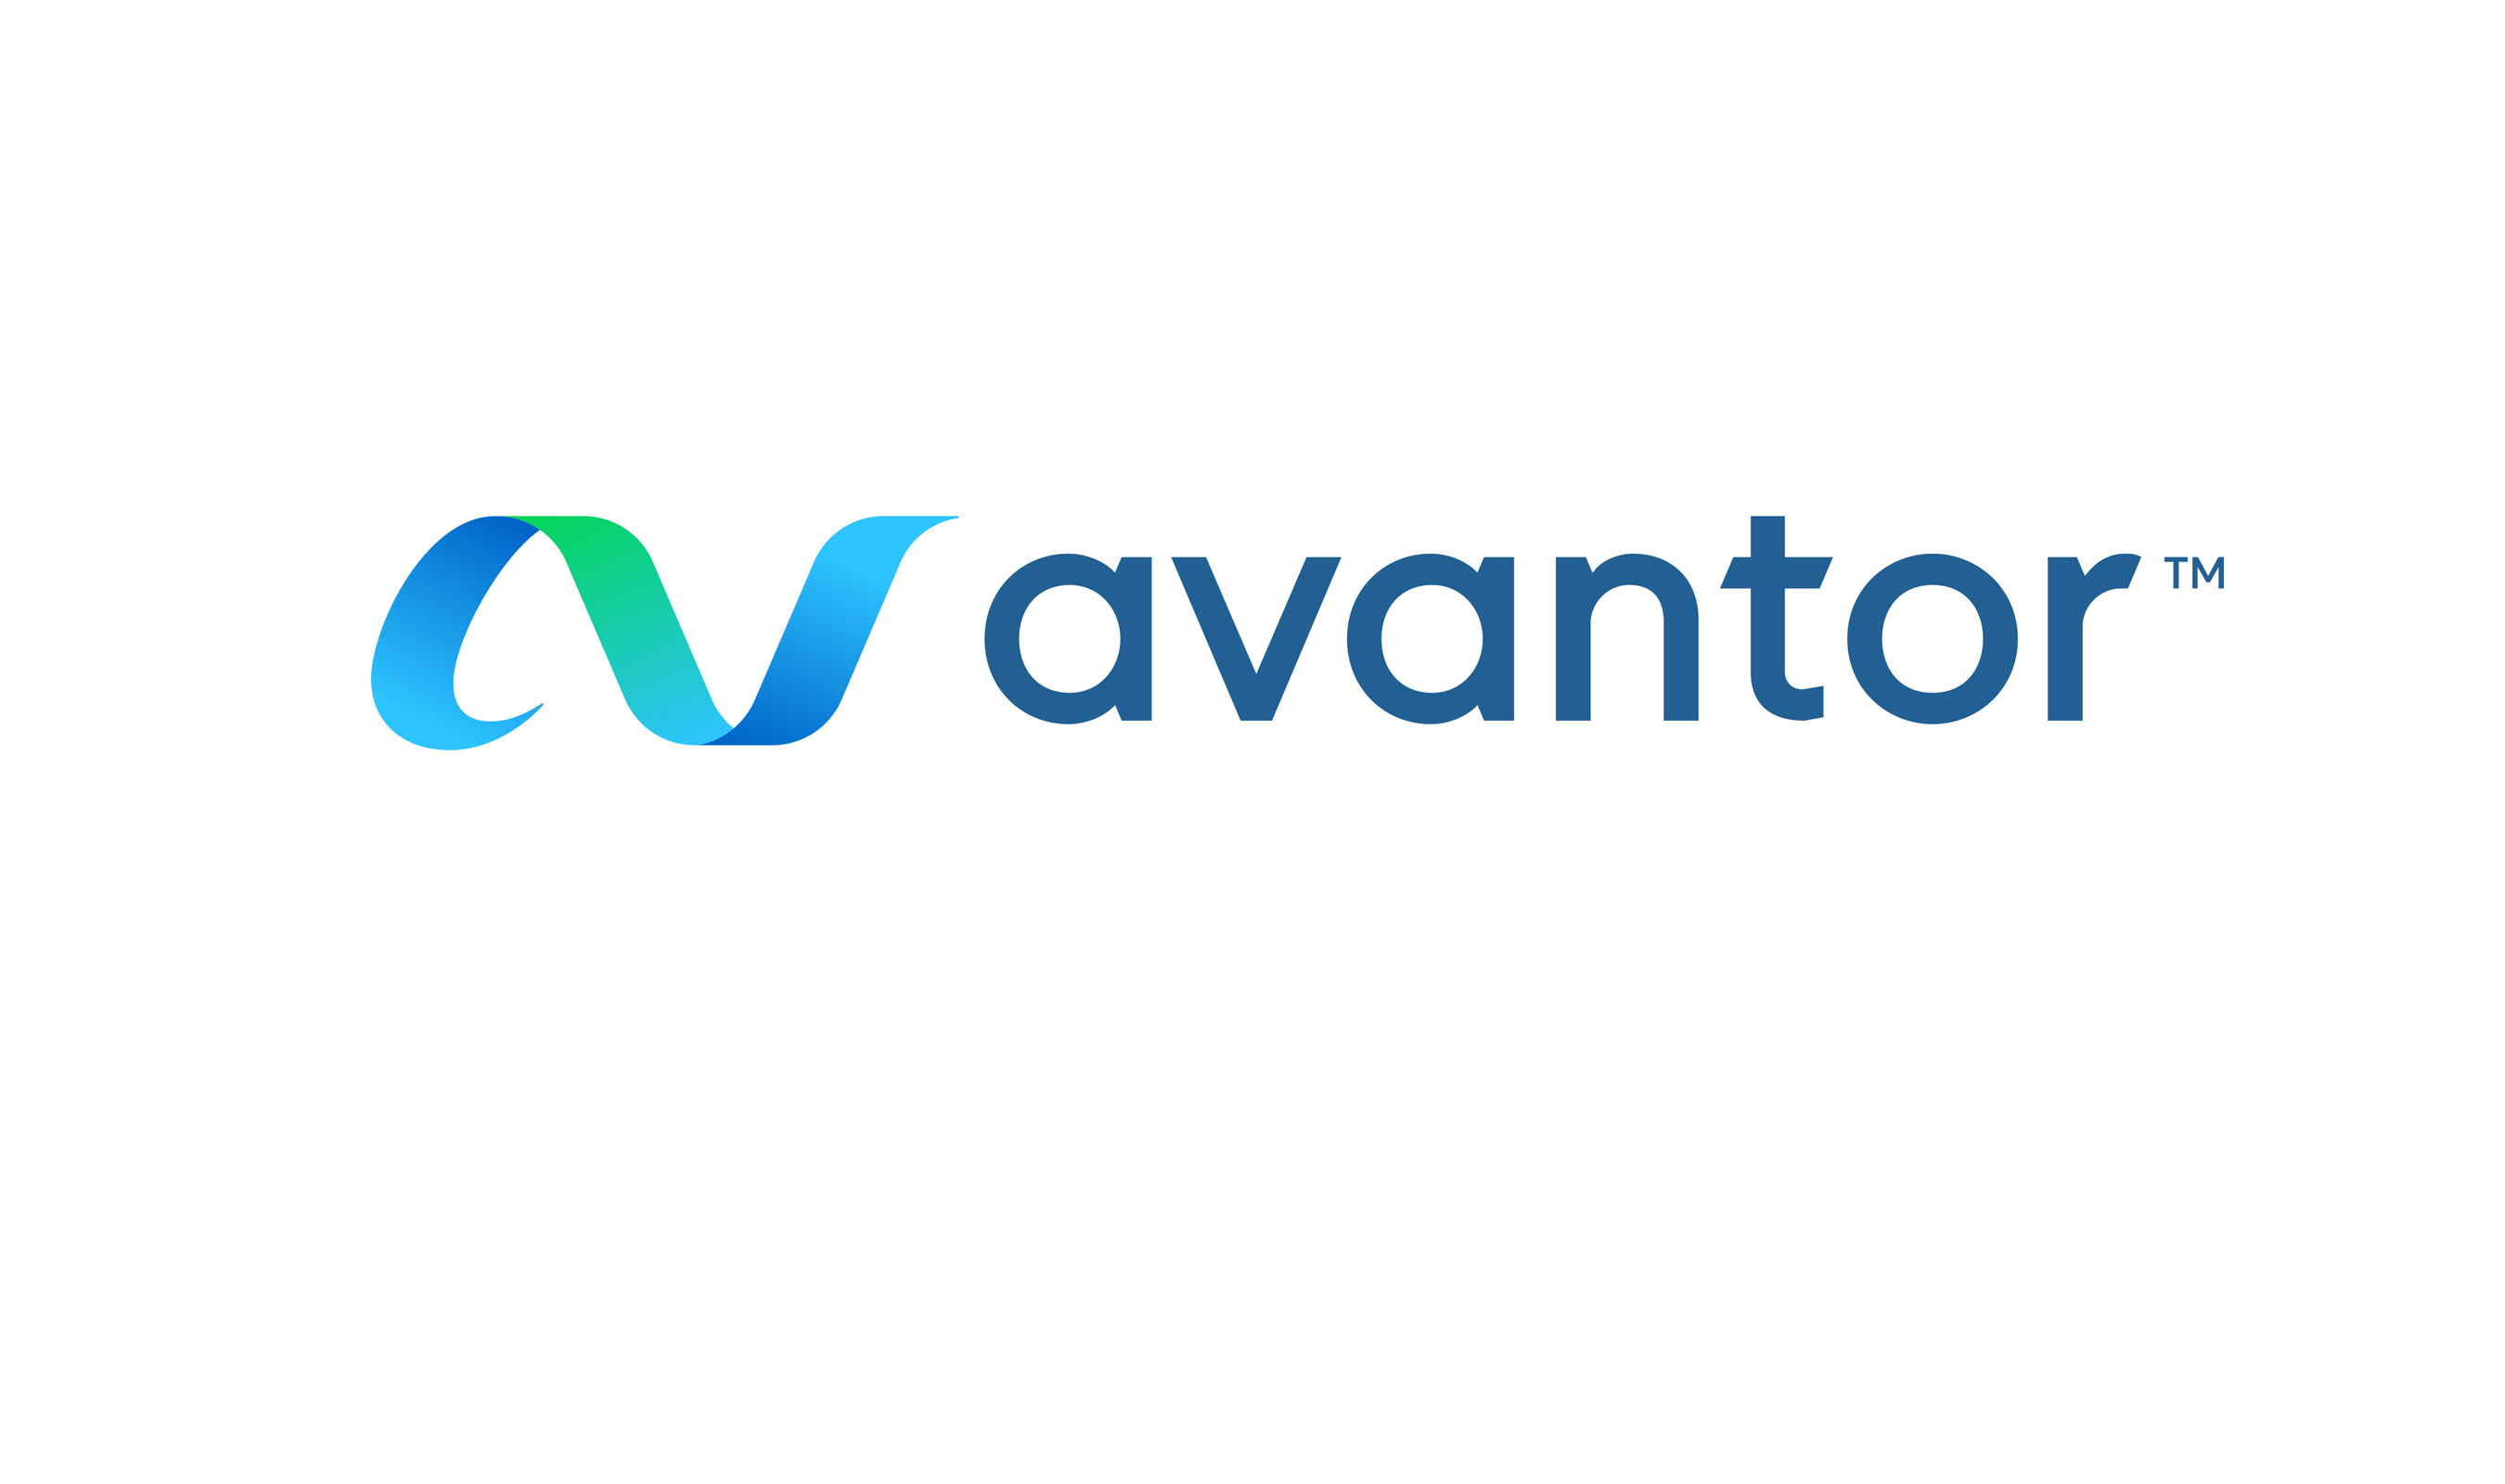 Avantor introduces new brand identity